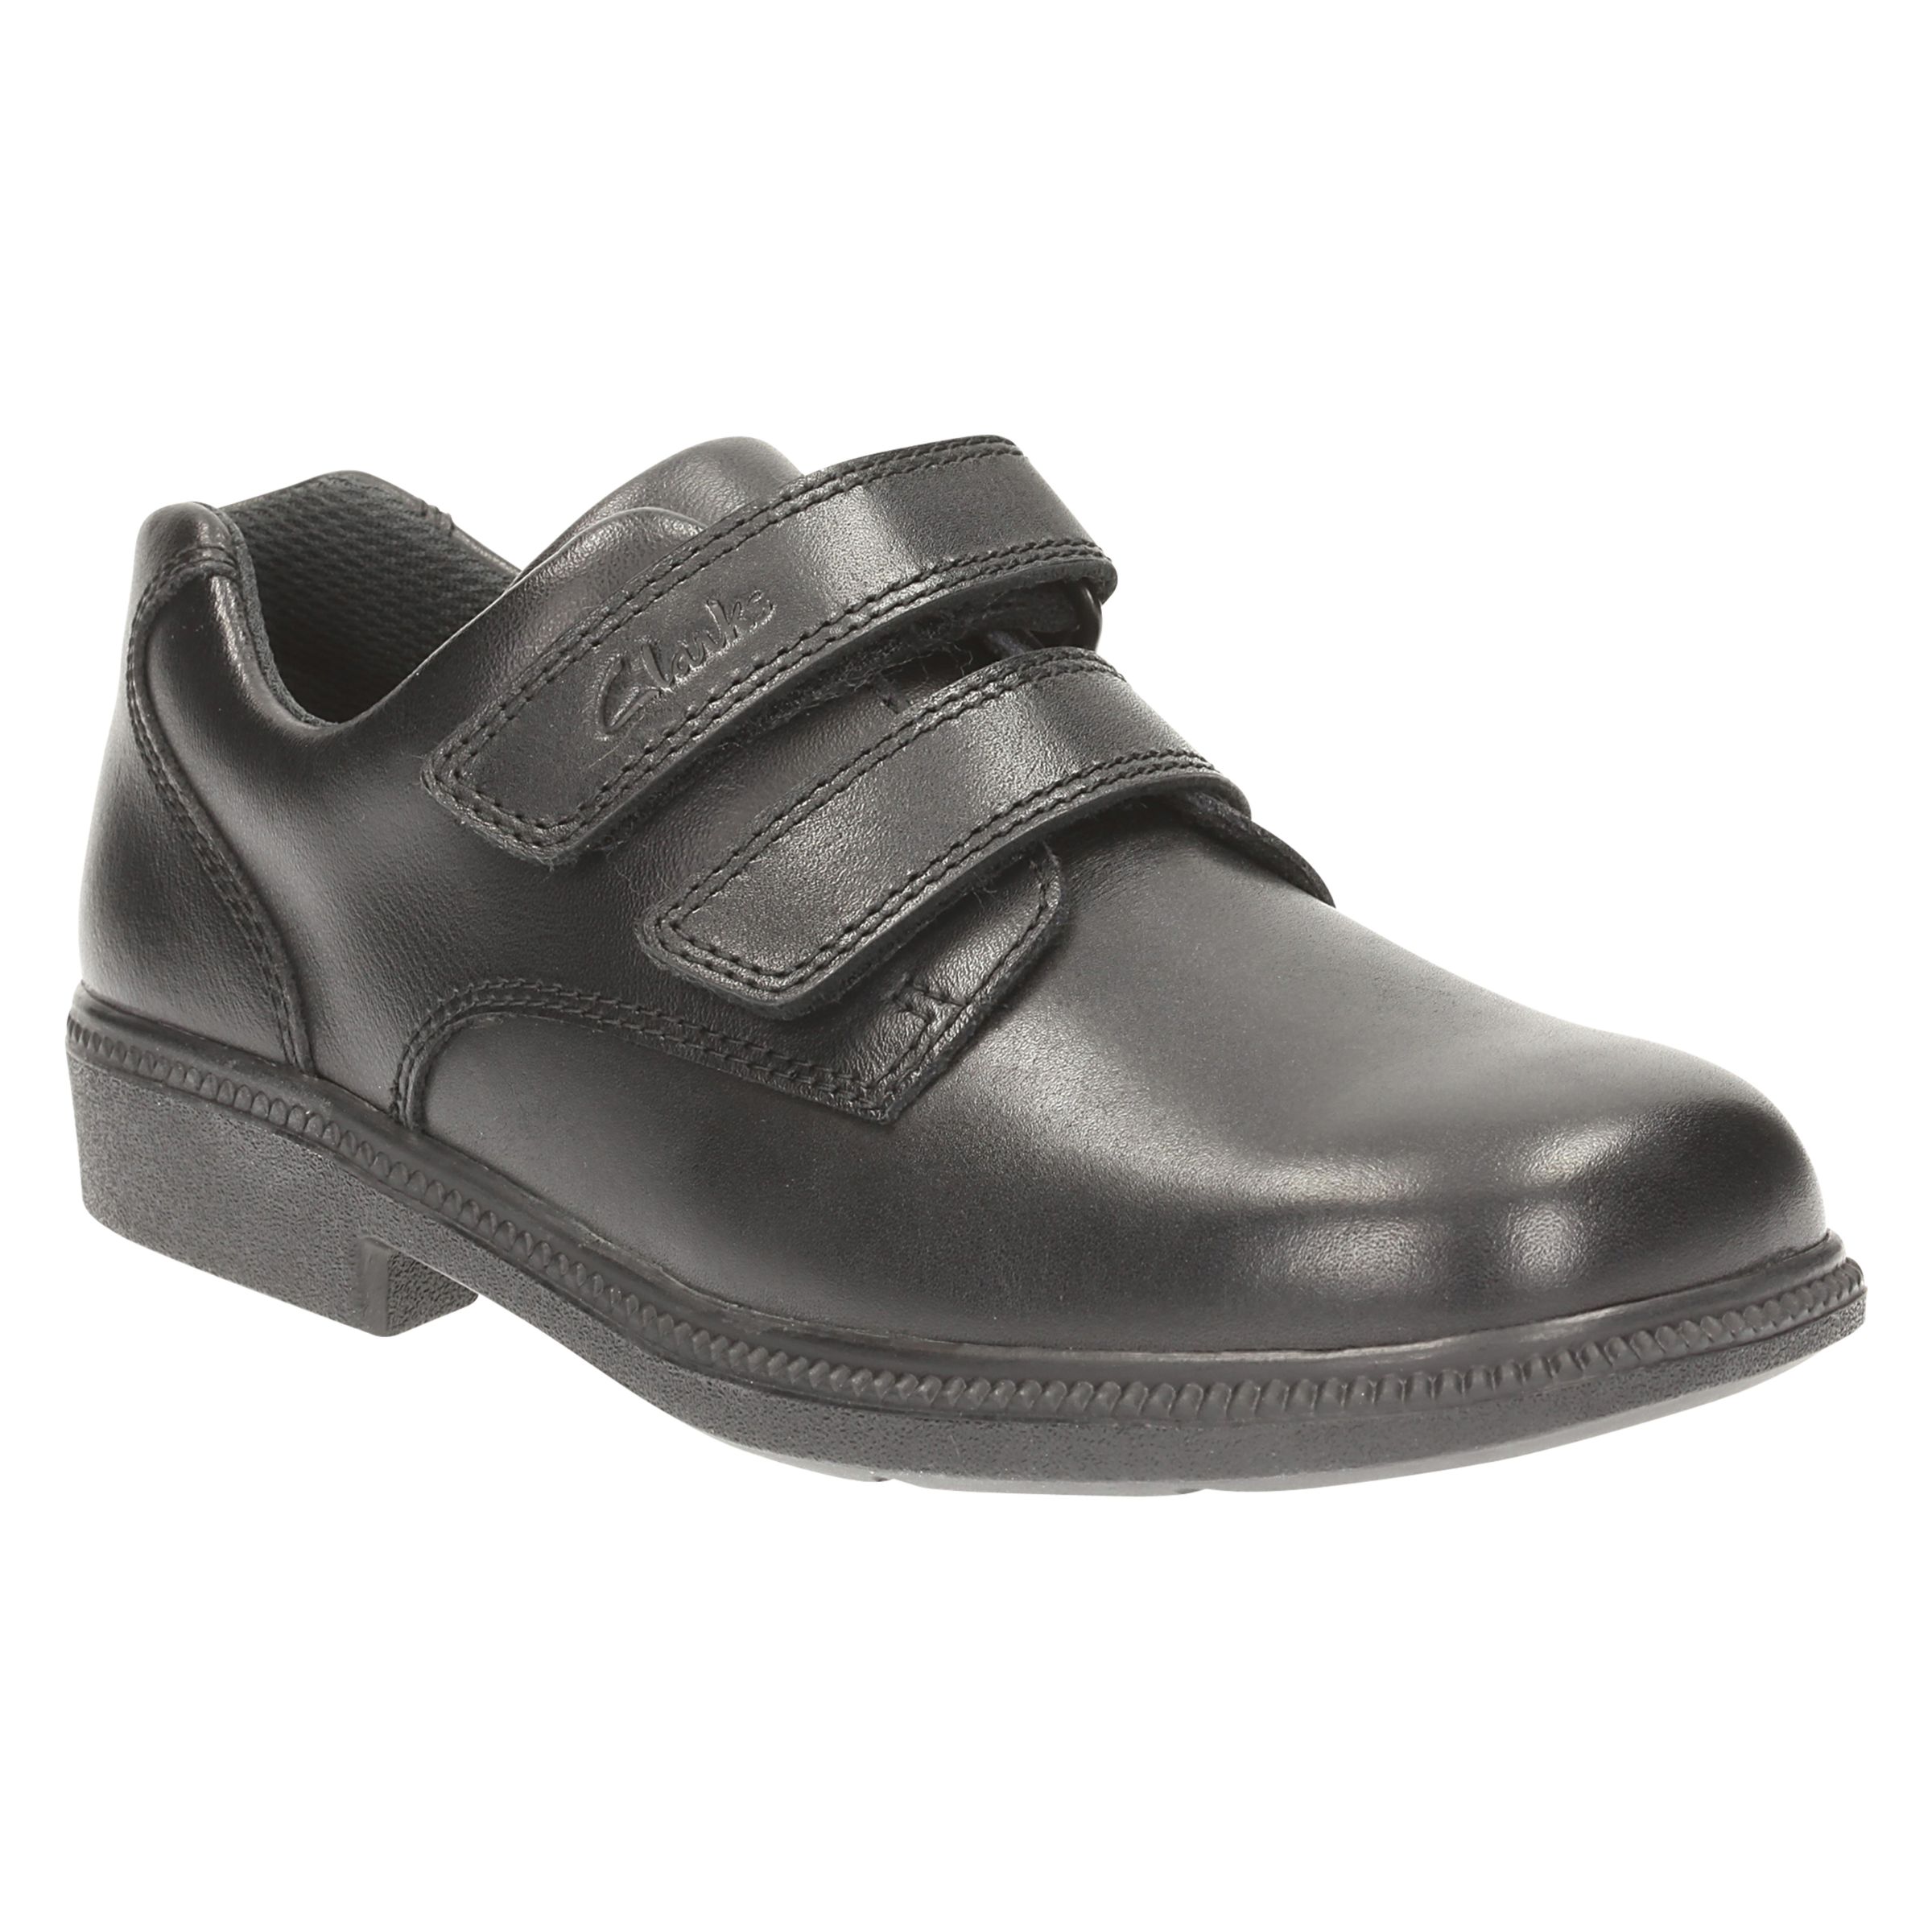 Deaton Gate Leather School Shoes, Black 